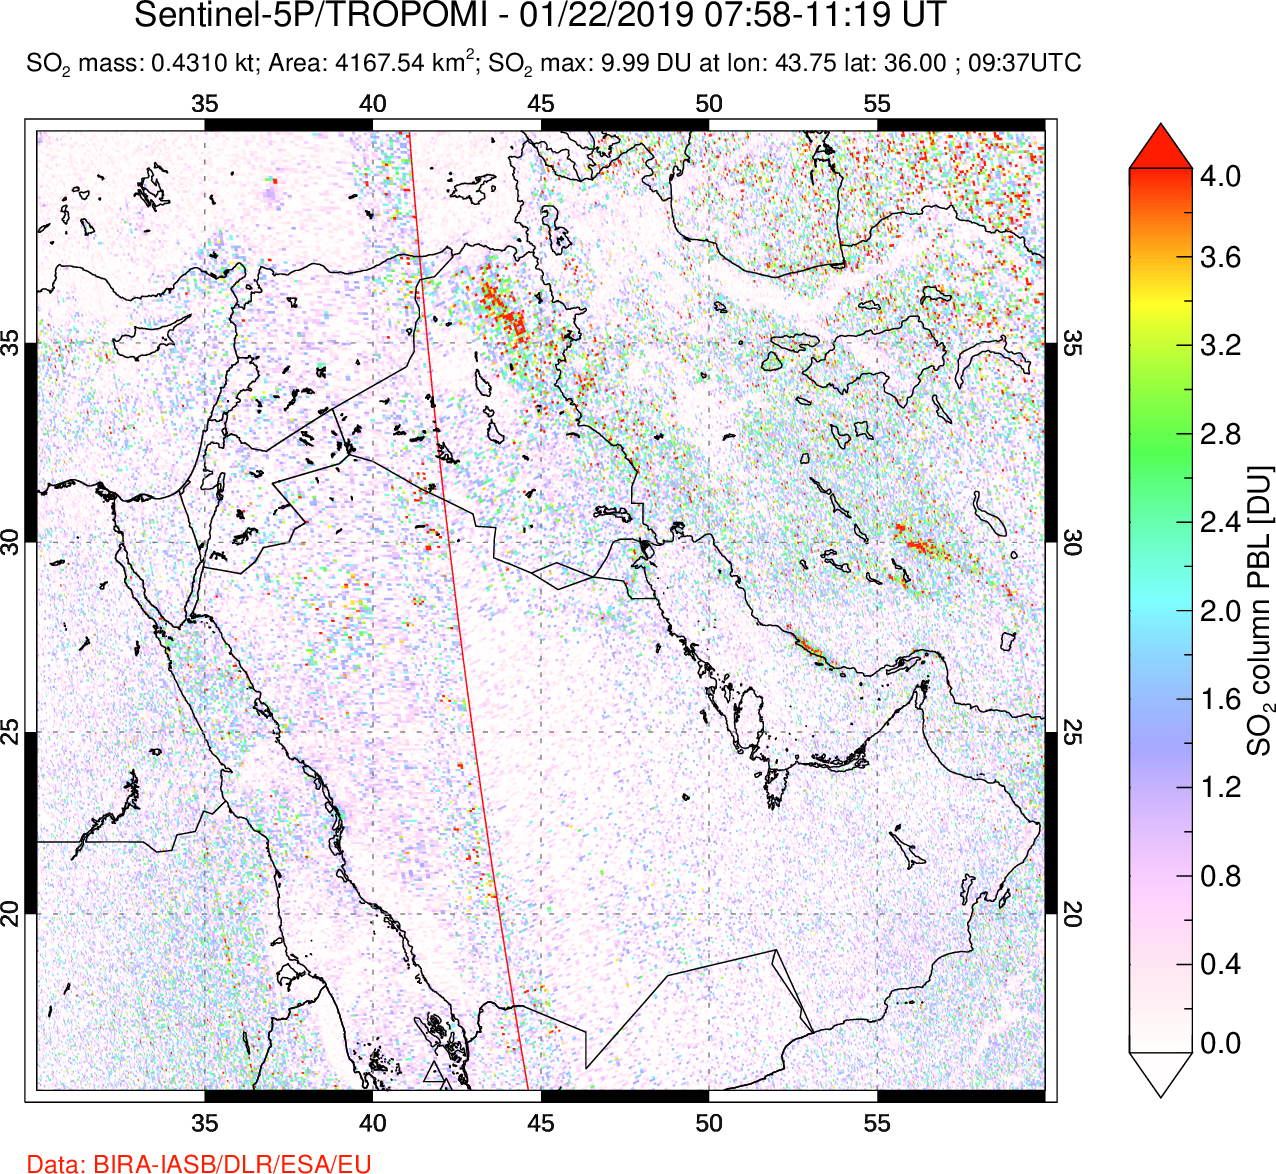 A sulfur dioxide image over Middle East on Jan 22, 2019.